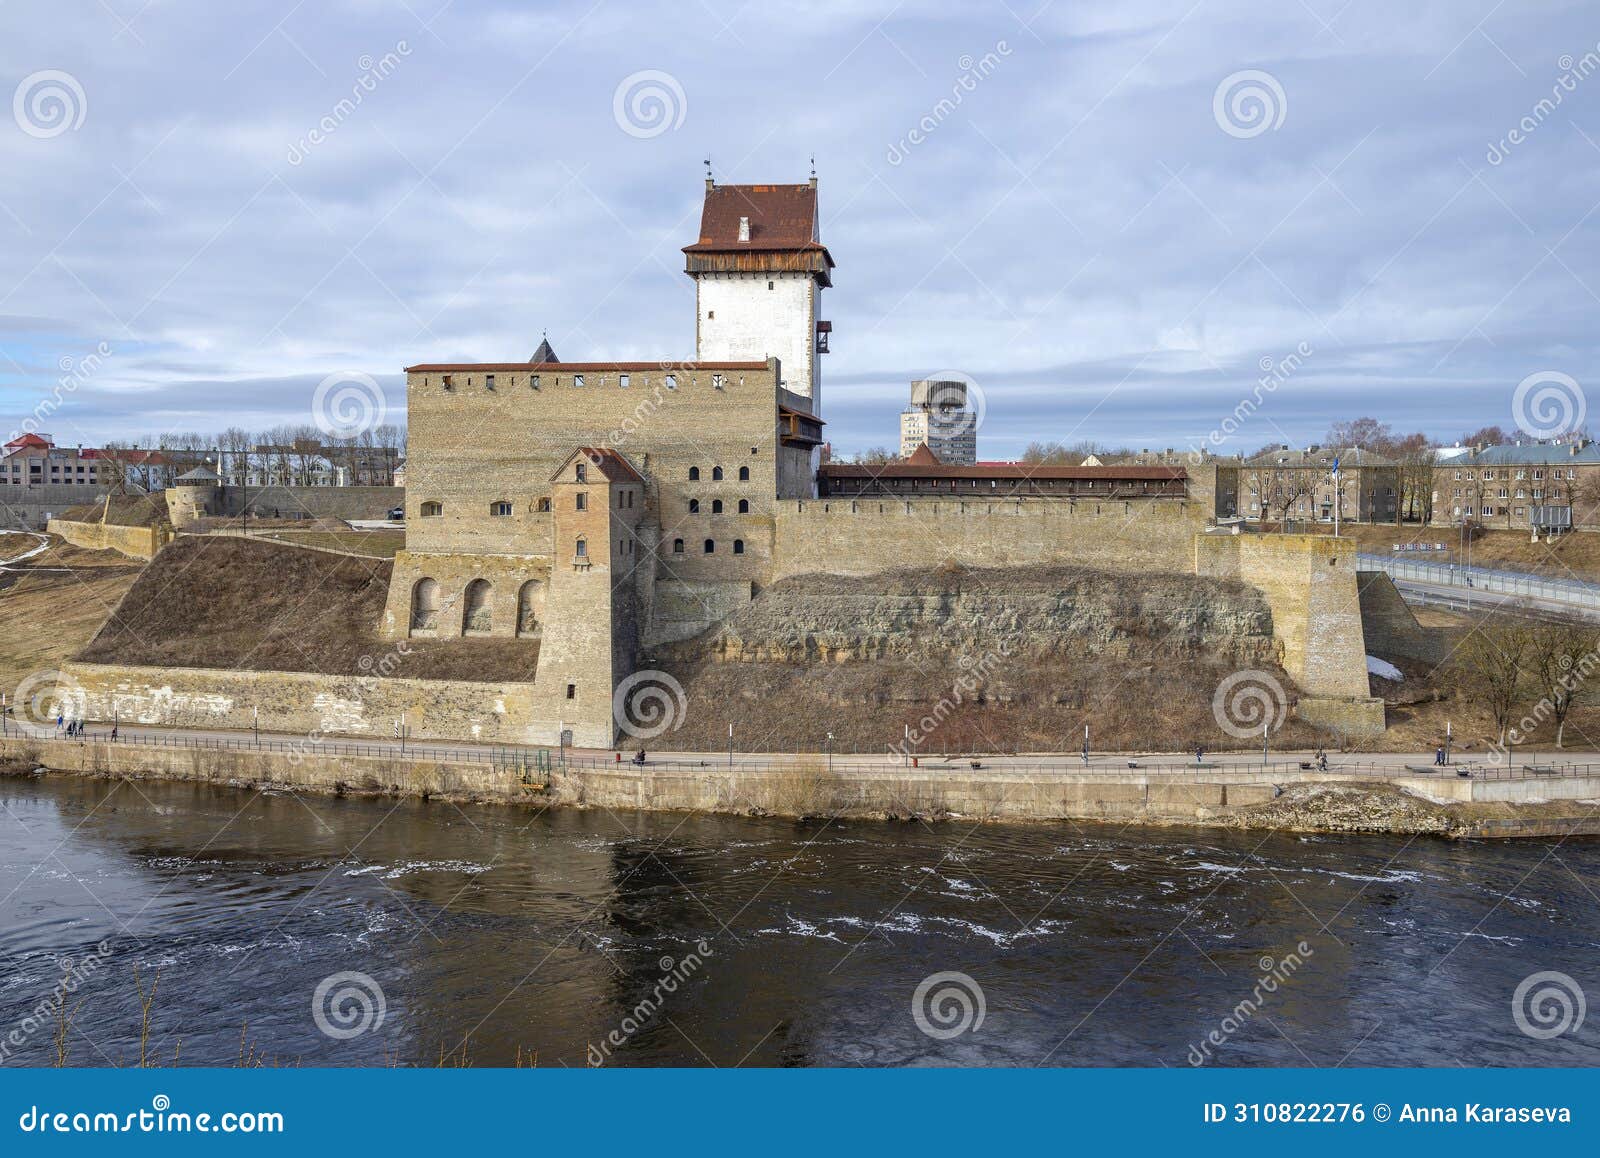 herman's ancient castle on the river bank. narva, estonia